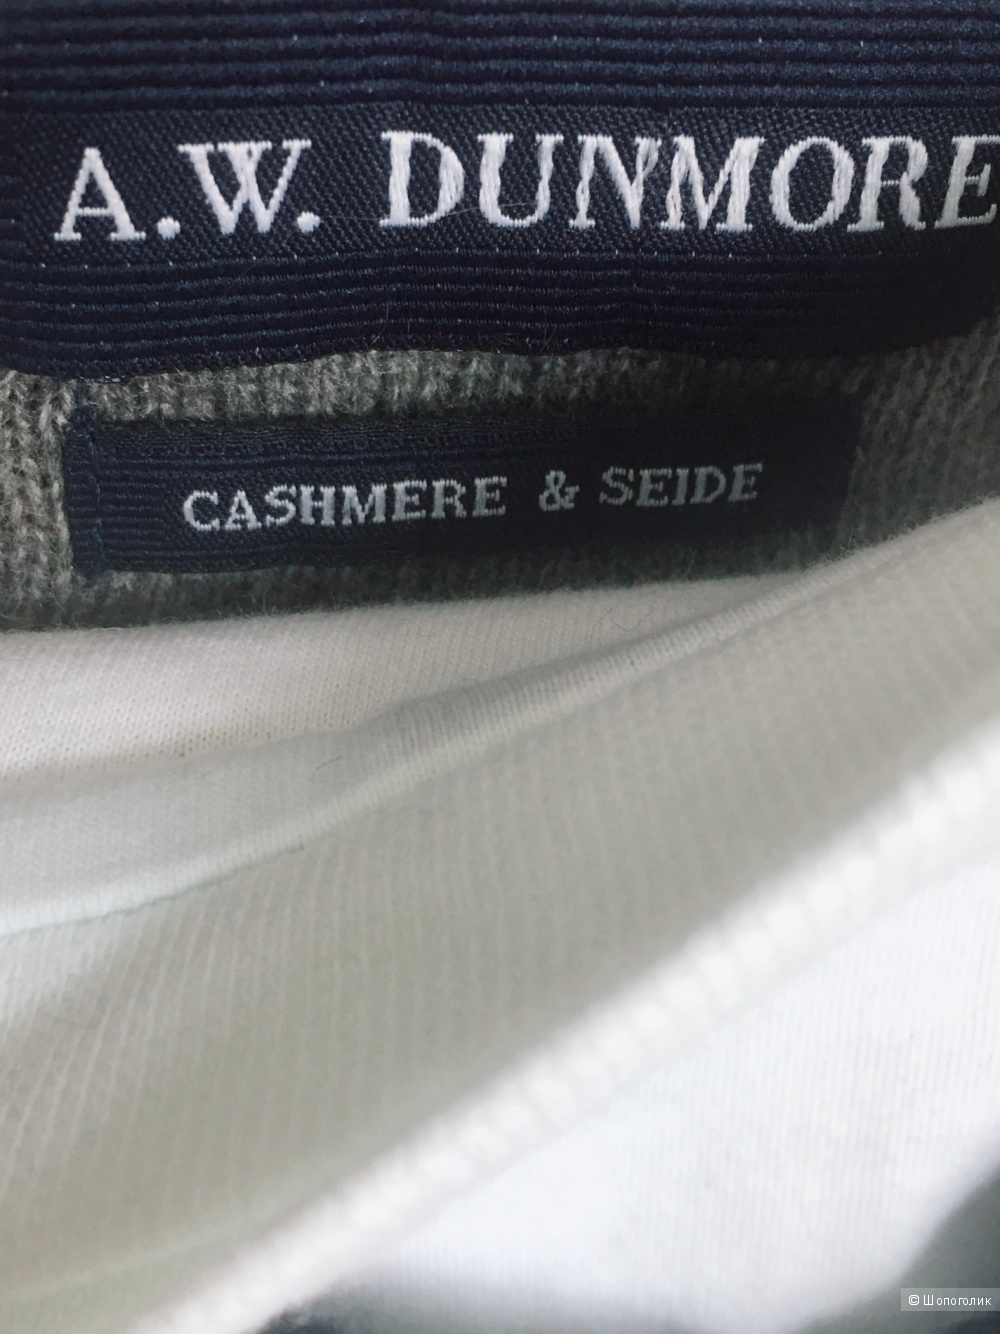 Пуловер A. W. DUNMORE. Размер L.